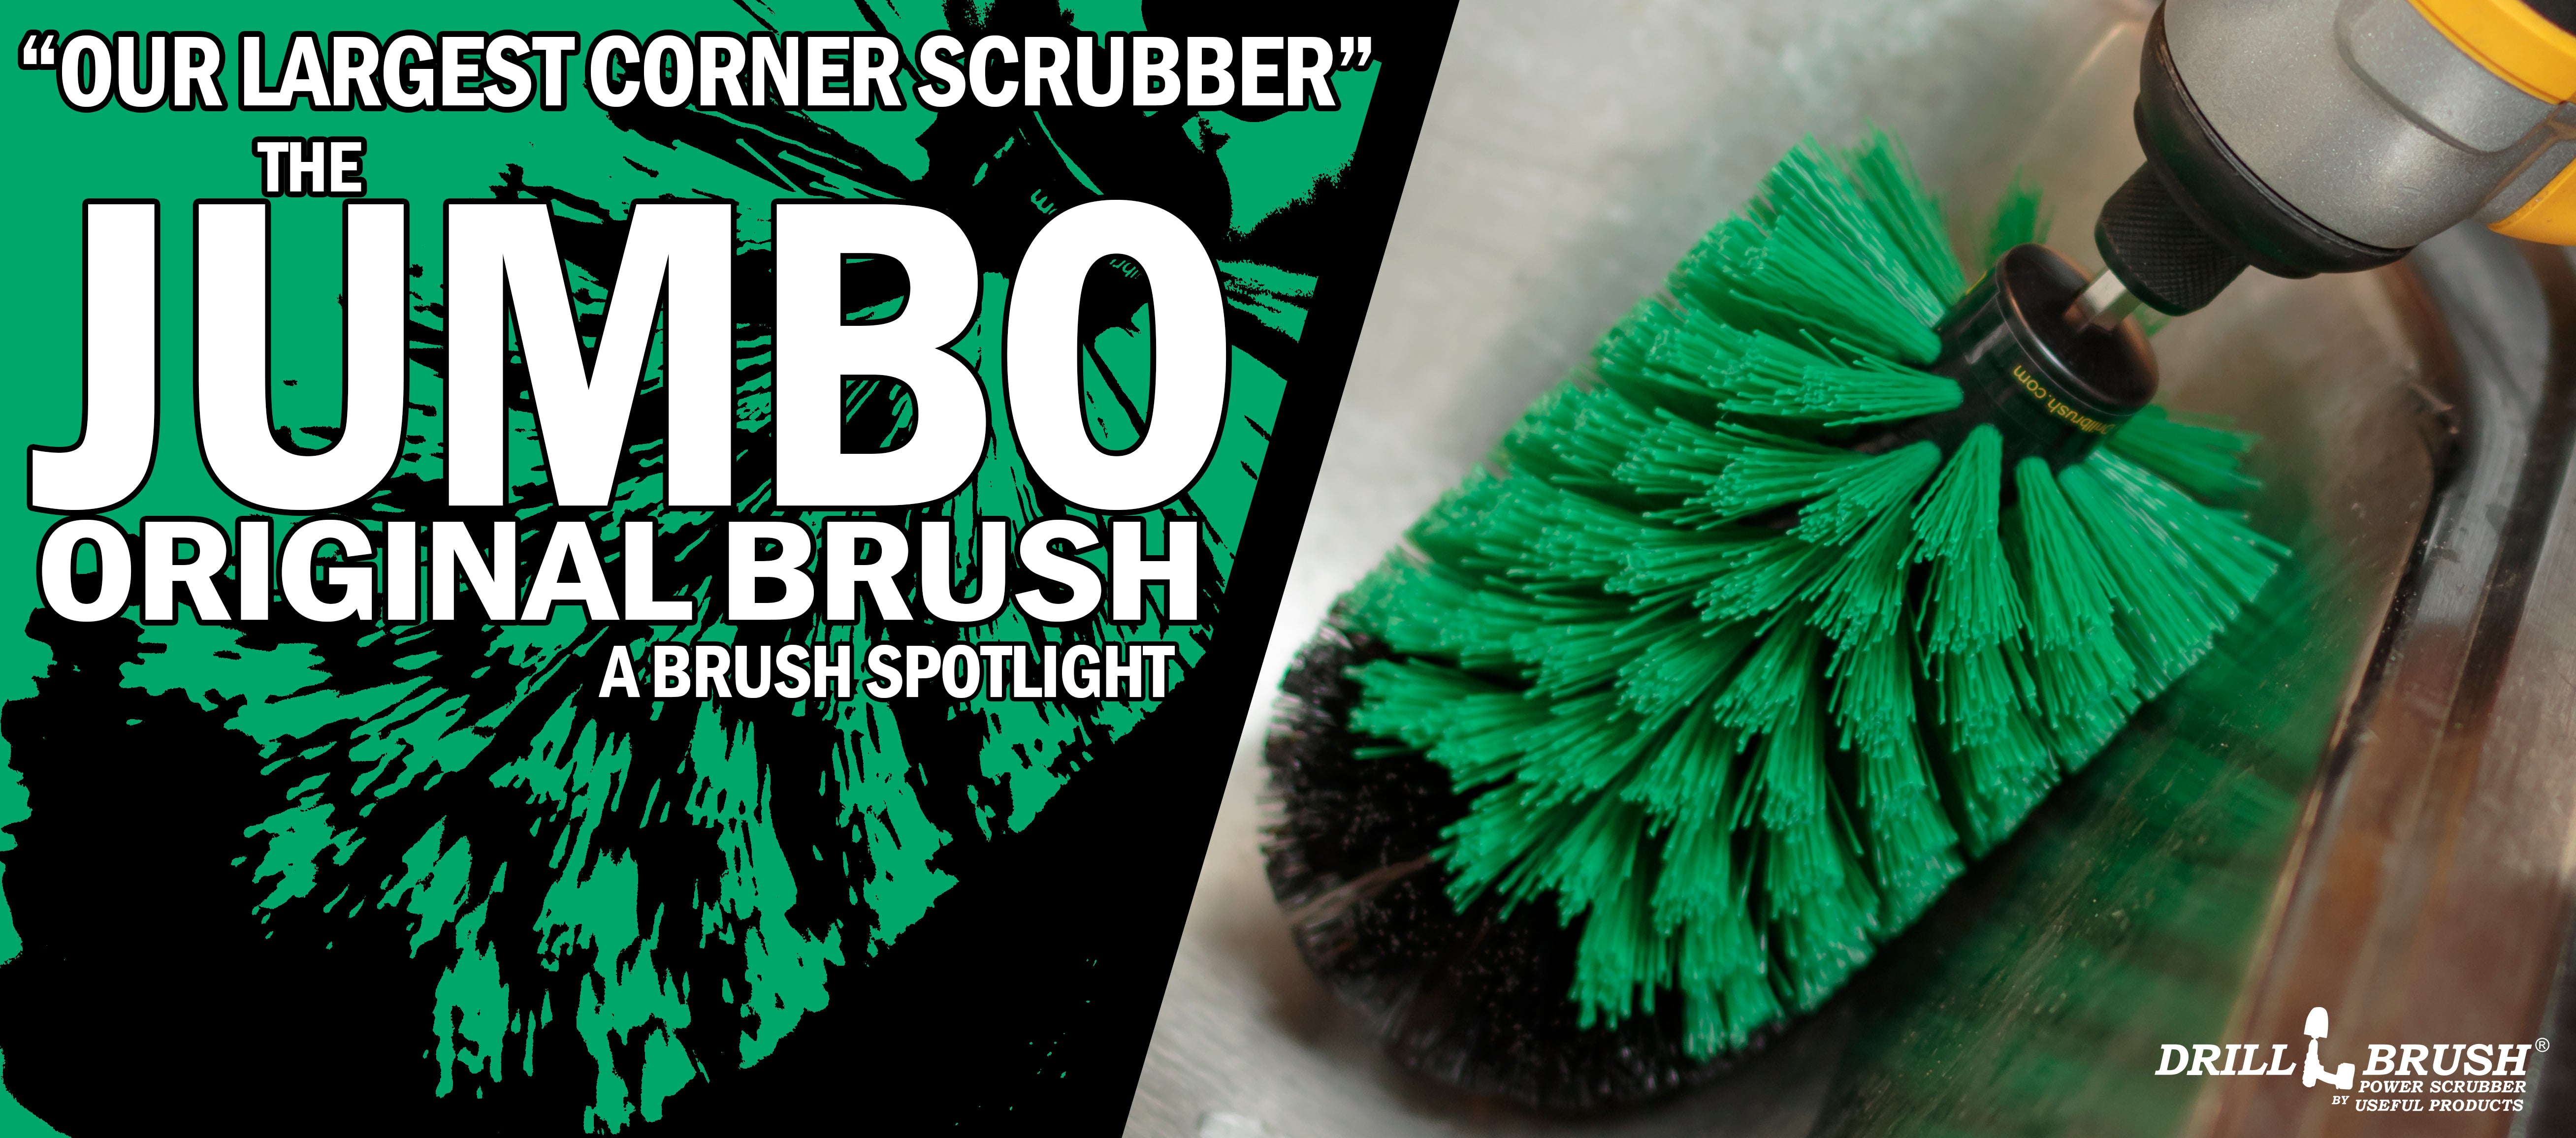 Our Largest Corner Cleaning Brush - Drillbrush Jumbo Original Brush Spotlight